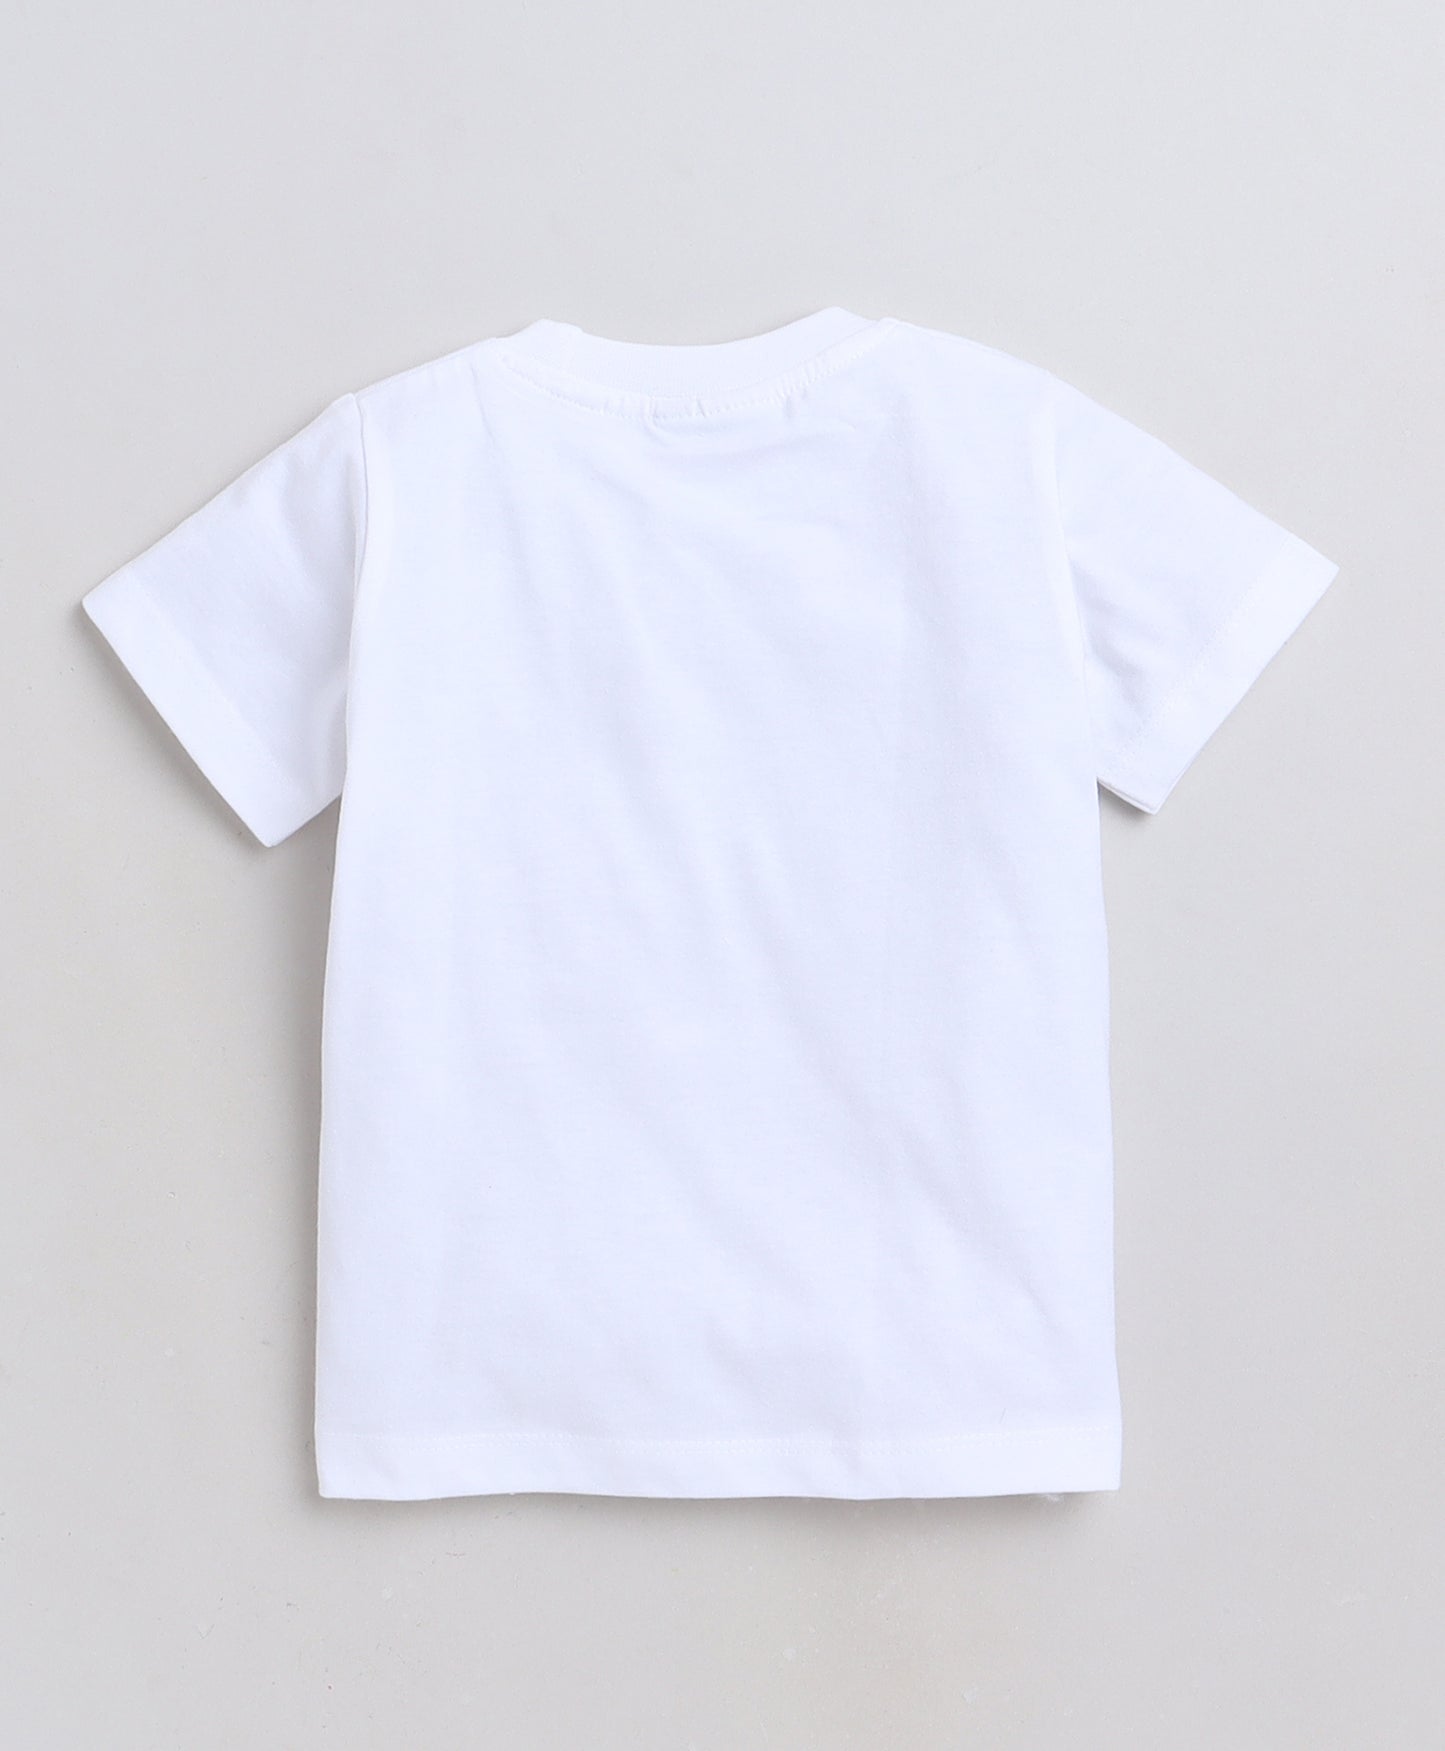 Aeroplane Print T-shirt and Pyjama- Blue and White